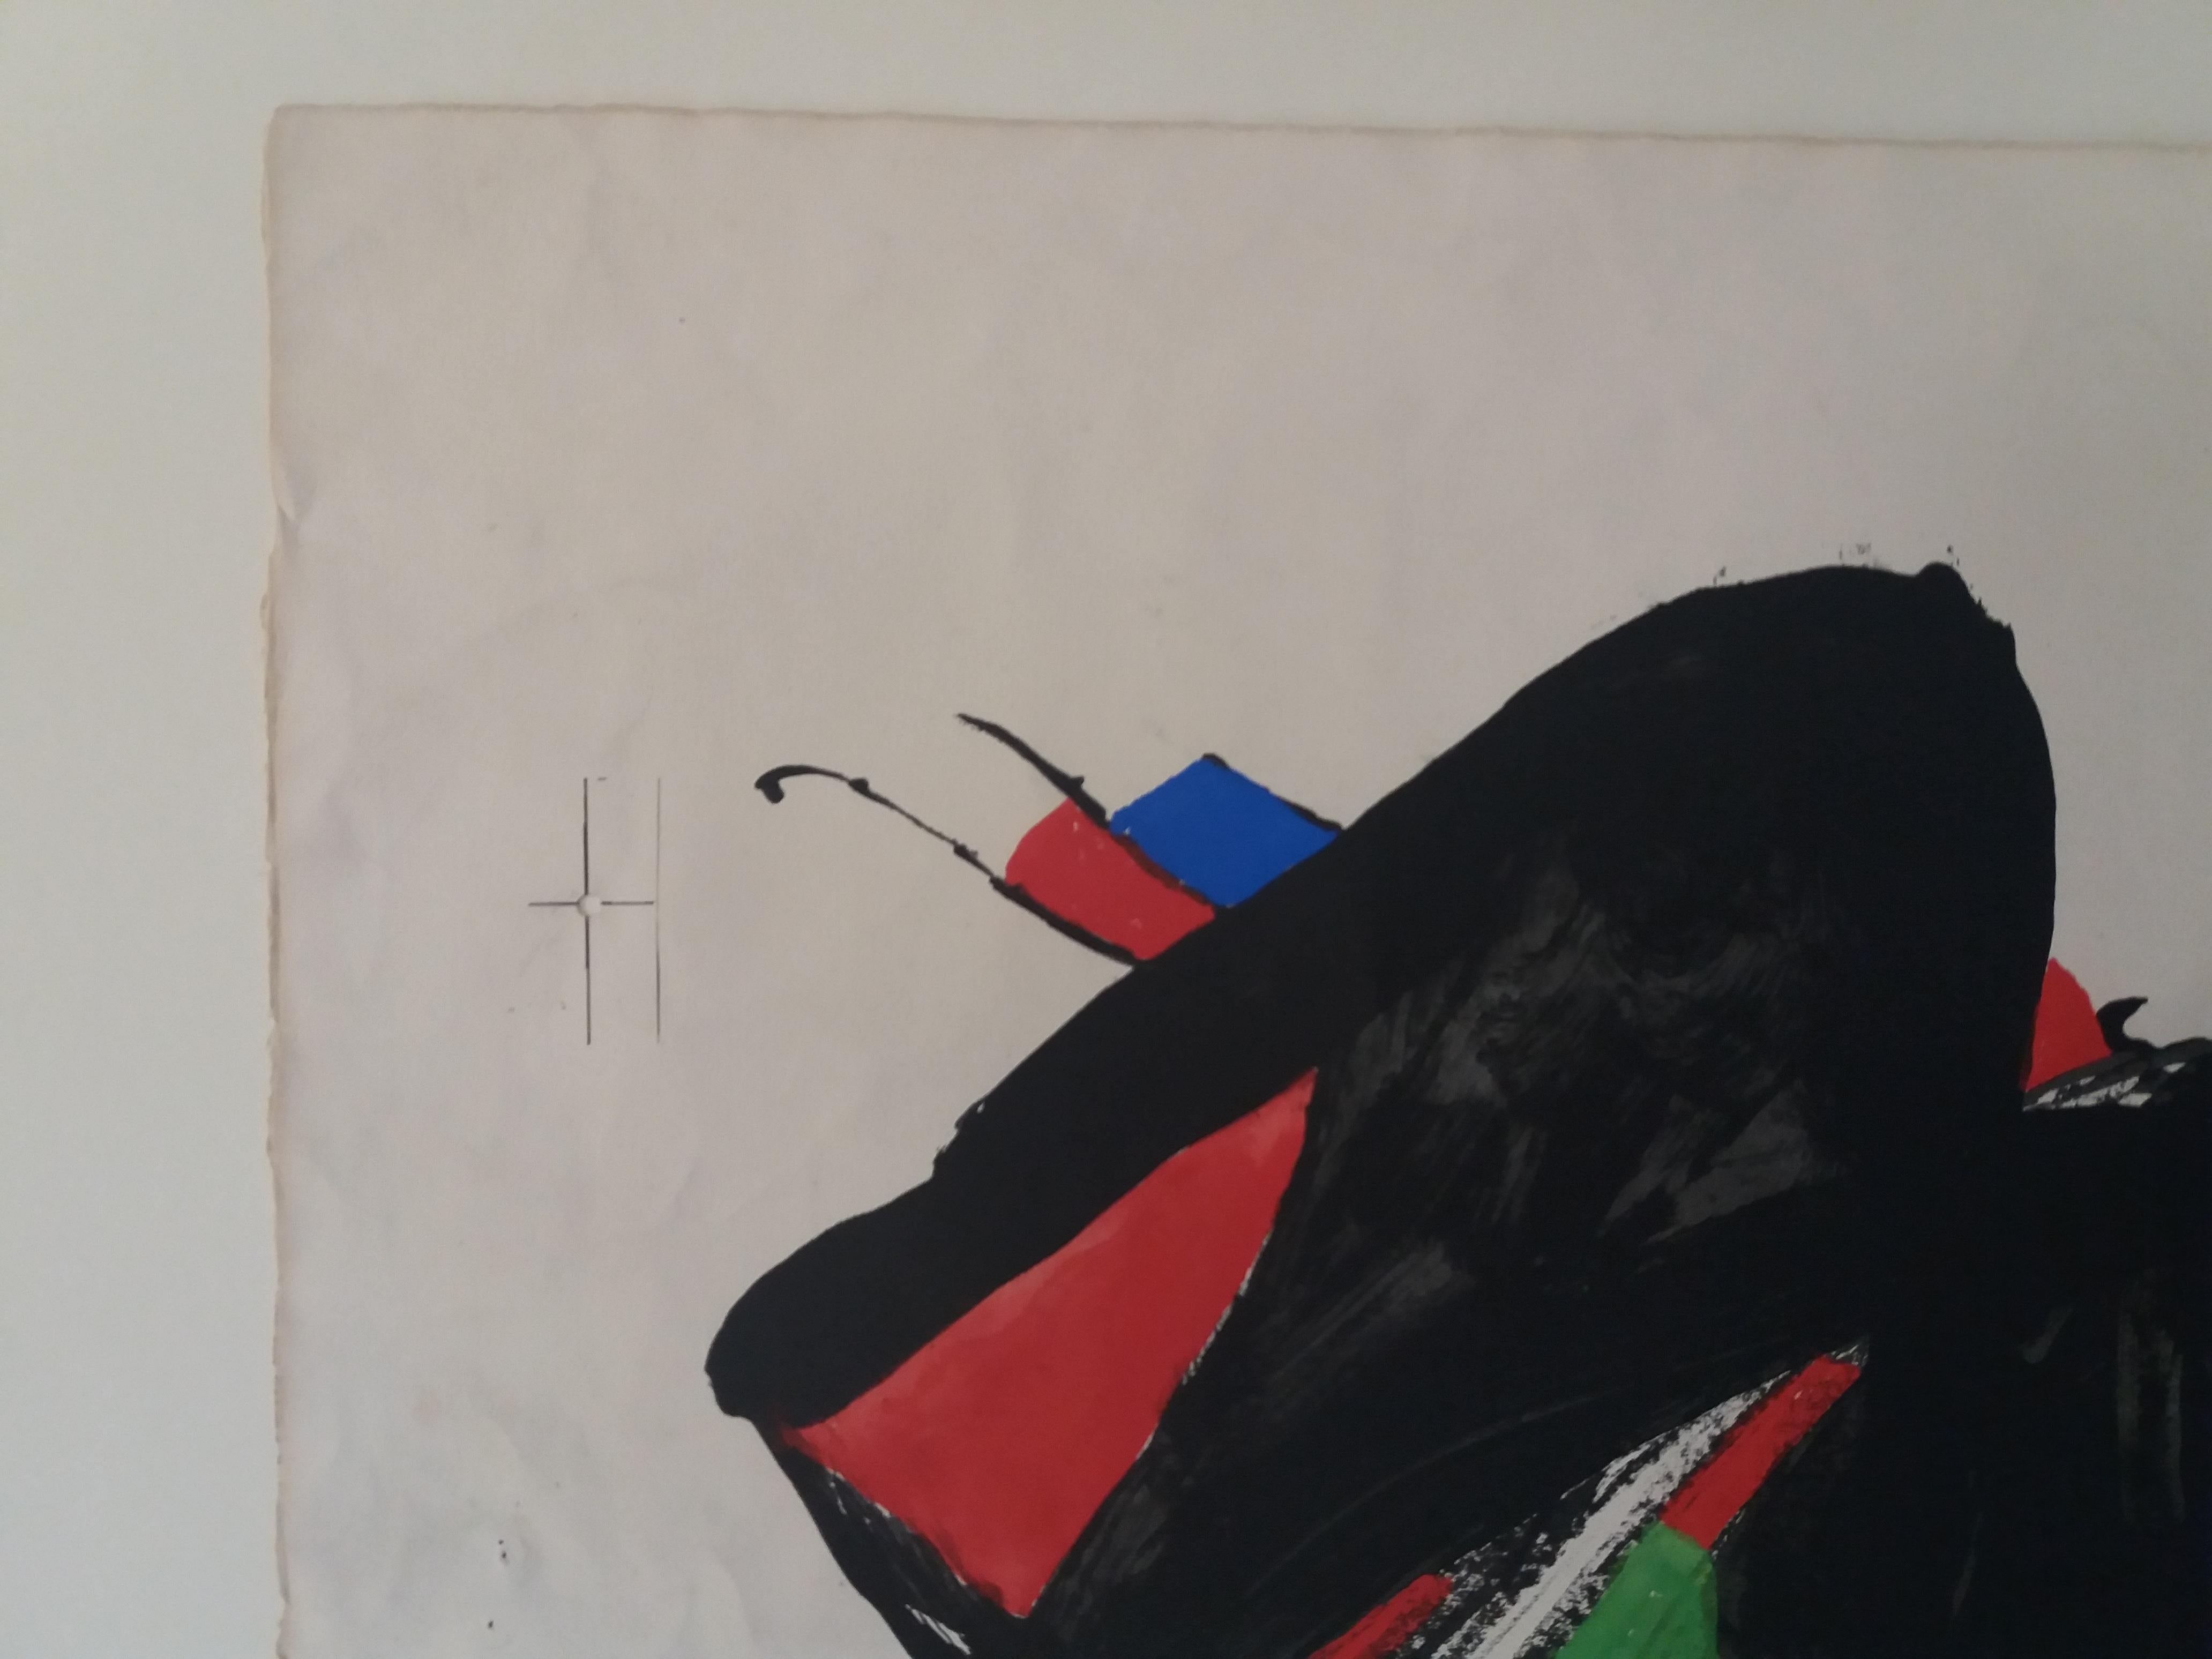 Joan Miro. Original single piece mixed technique painting
Joan Miro Ferra
1893-1983
Original Study for “EL GOLAFRE 